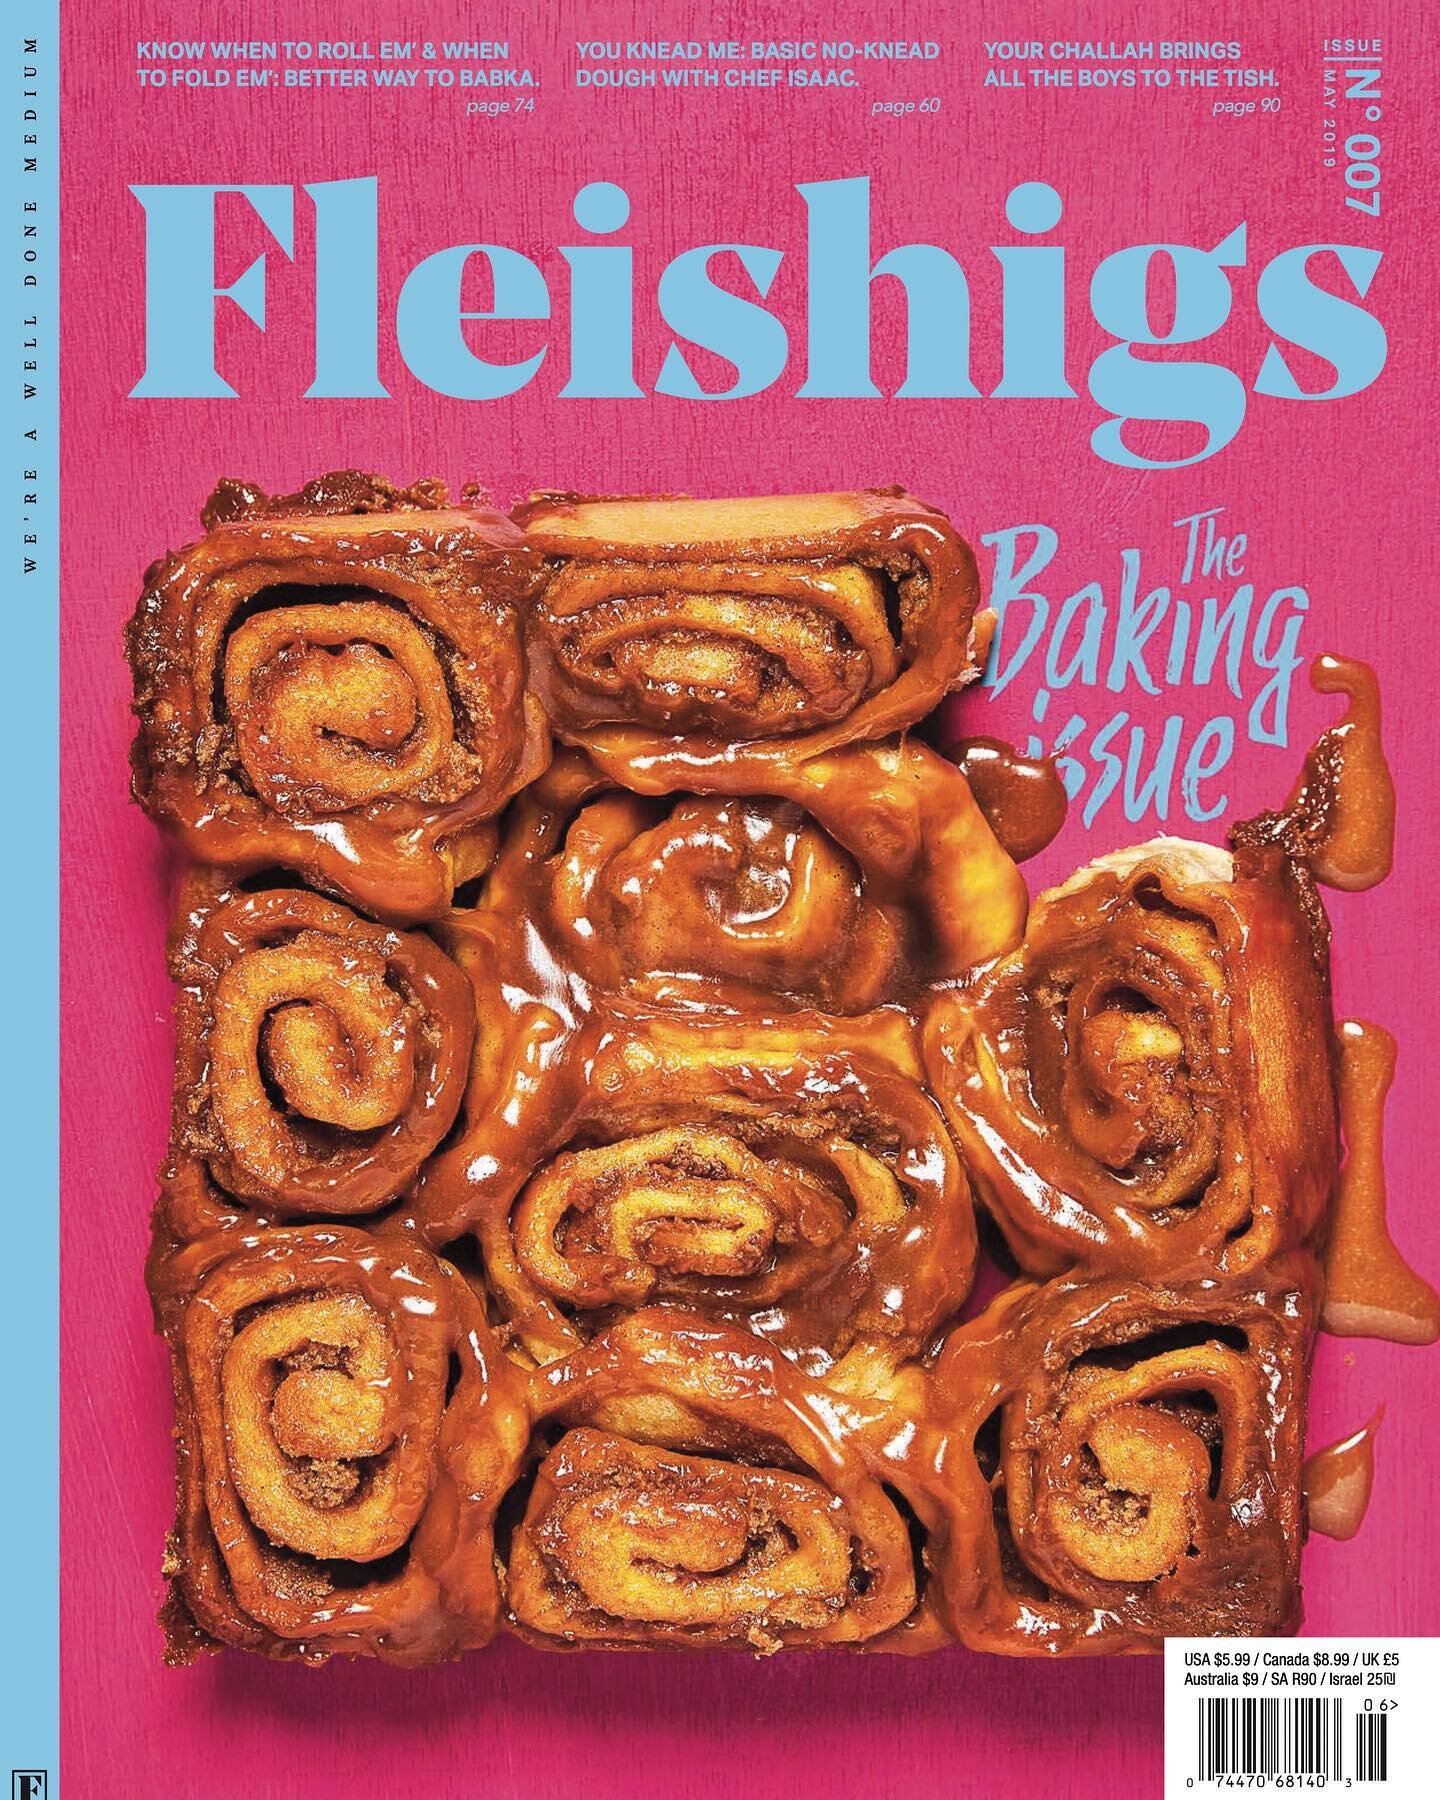 Tahini cinnamon buns on flamingo pink 🍩
-
-
Cover story for @fleishigsmag Issue 007
Editor in Chief/Stylist: @shifraklein -
-
#fleishigs #fleishigsmag #food #foodie #foodphotography #foodmagazine #tearsheet #tahinicinnamon #cinnamon #tahini #bakedgo